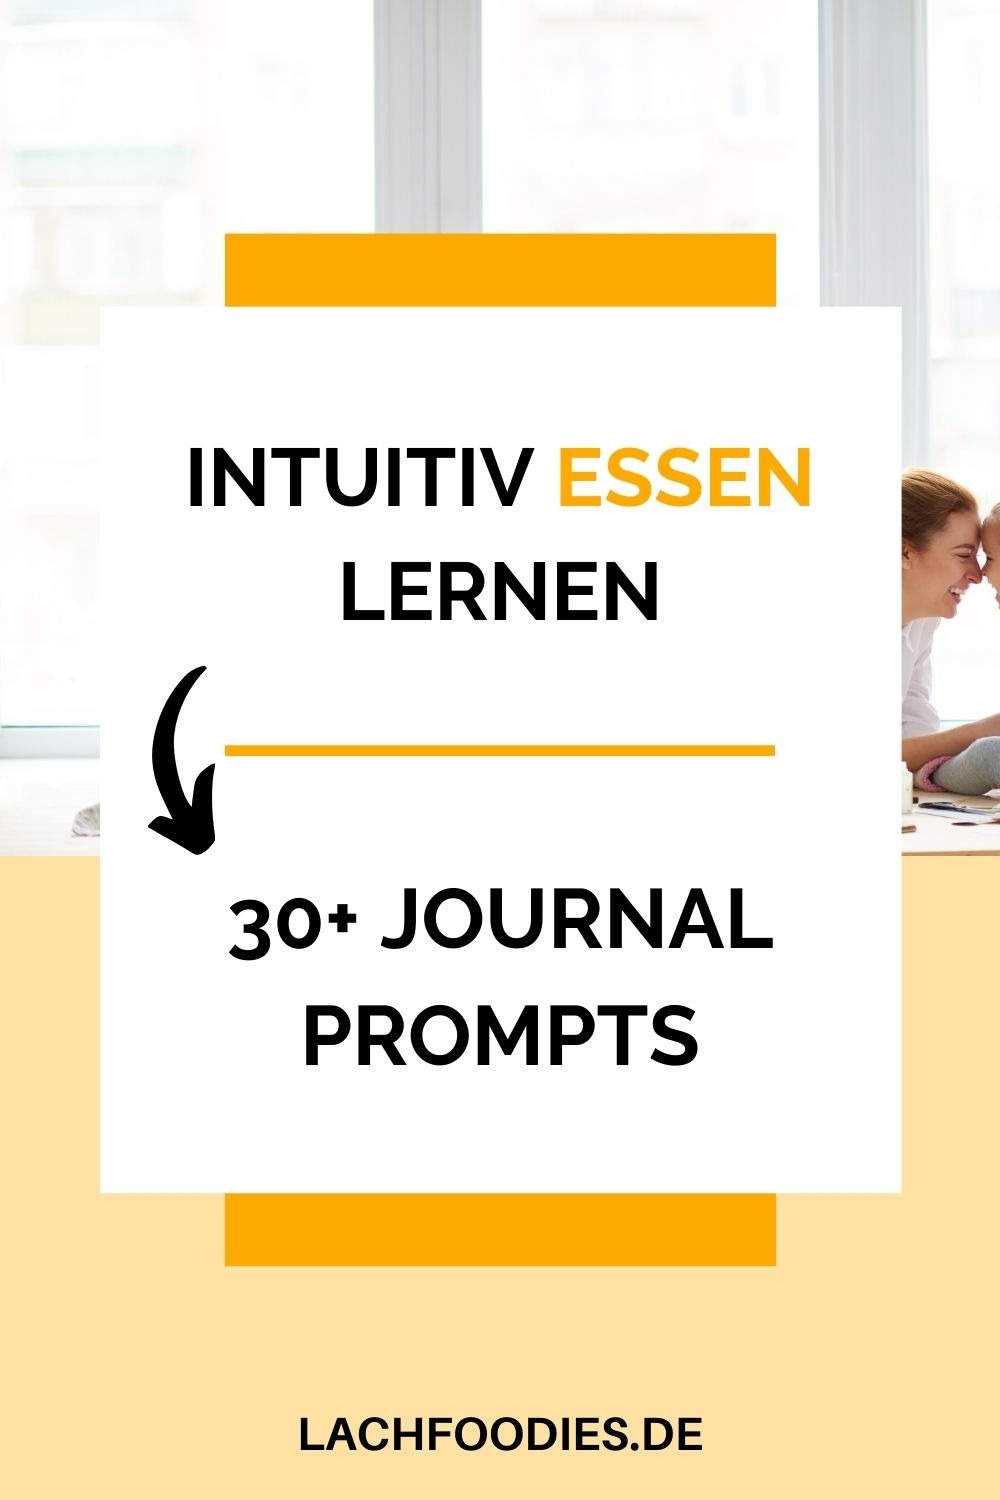 Intuitiv essen lernen: 30+ Journal Prompts